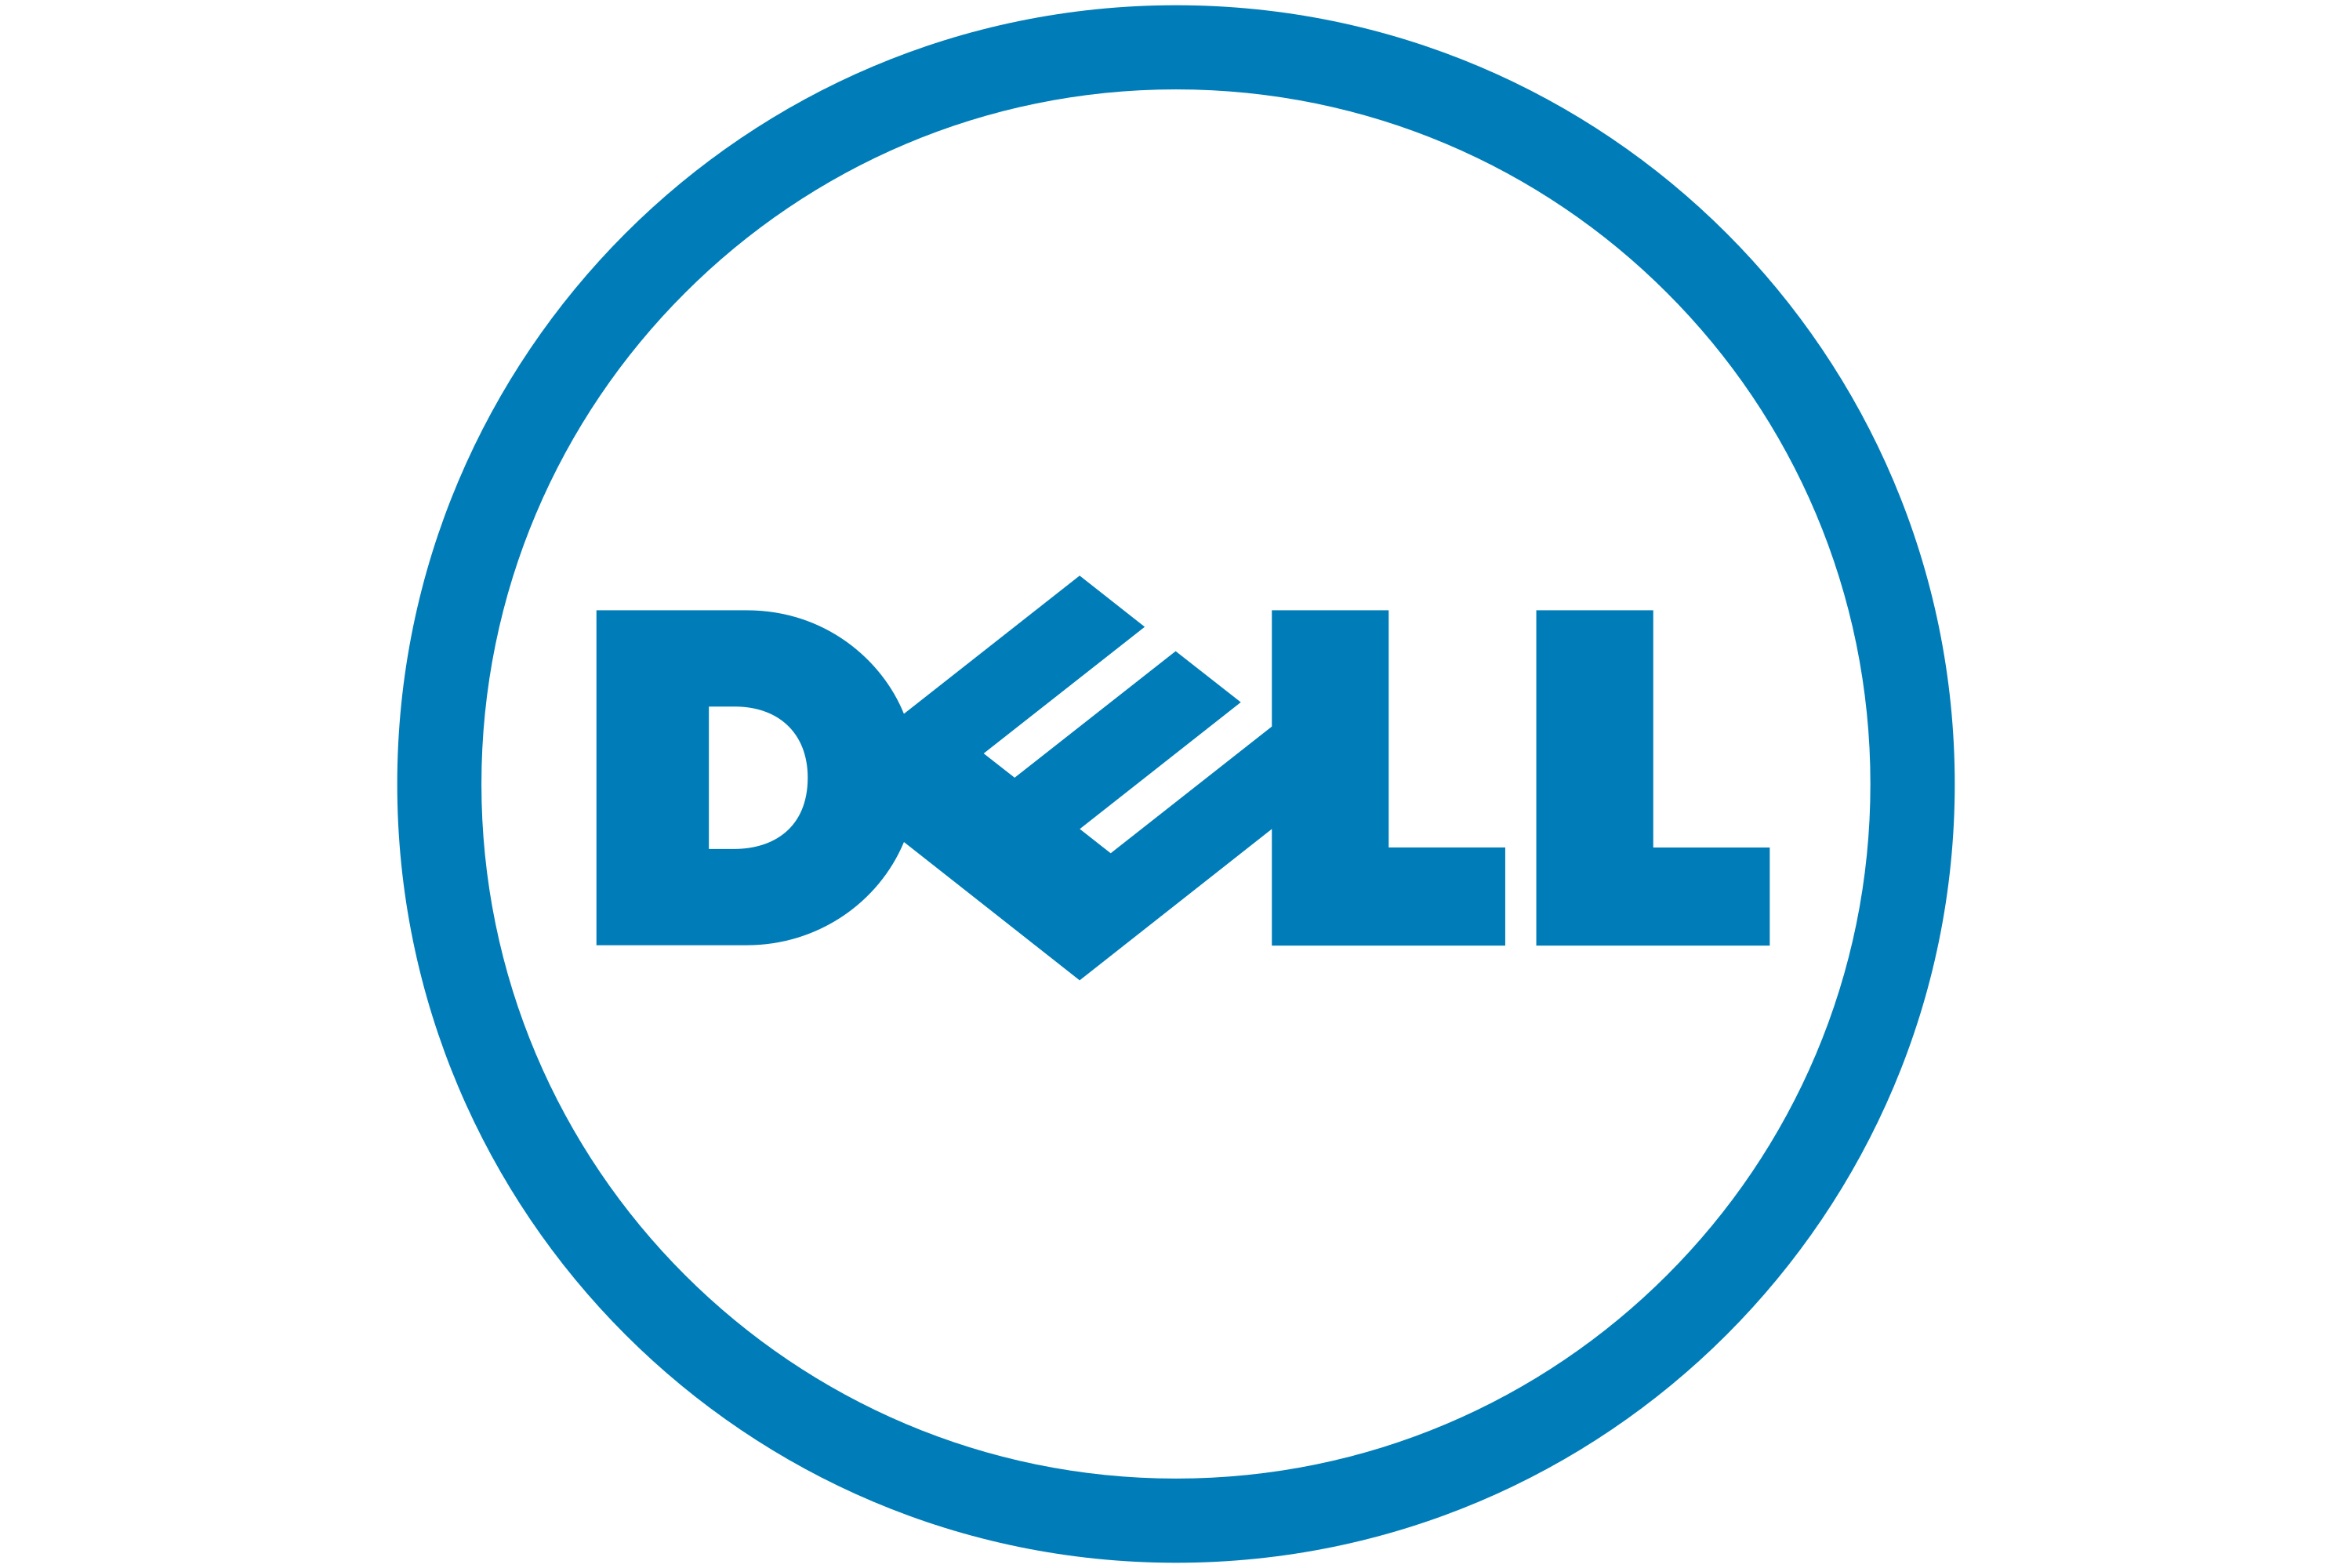 Dell Laser Toner Cartridge Logo